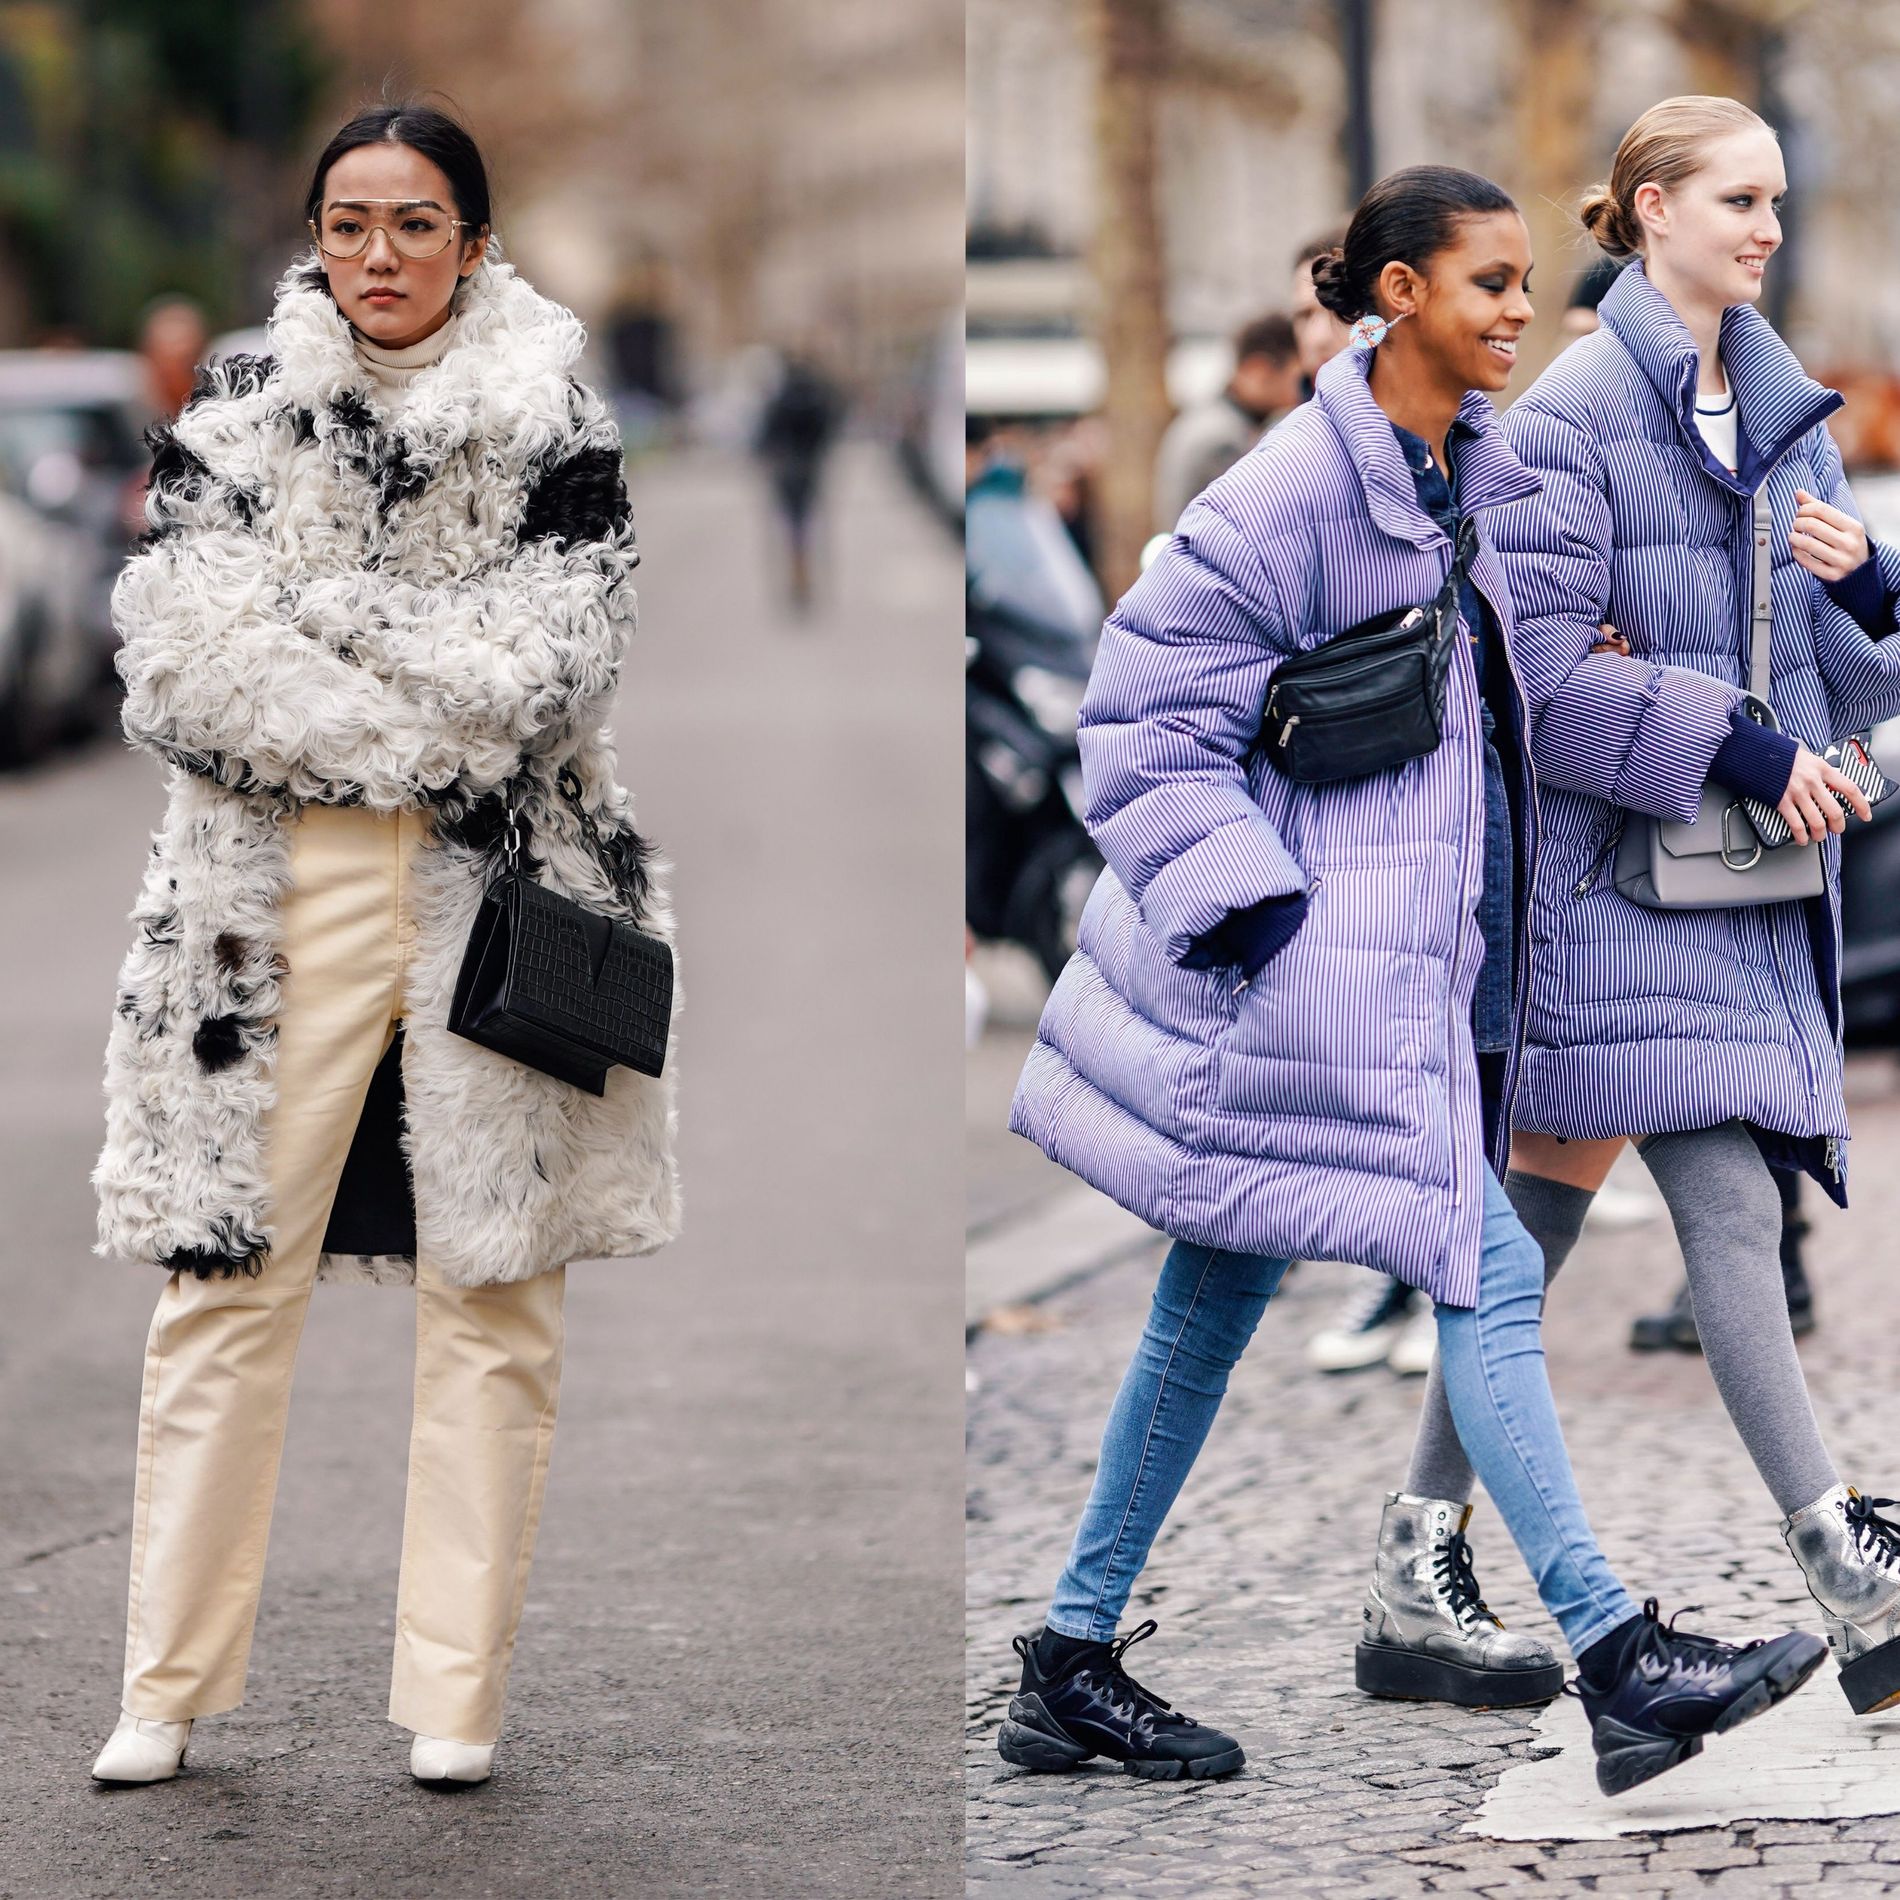 Candy Colors Women Small Tote Plush Shoulder Bag Faux Fur Female Clutch Purse  Handbags Winter Fashion Ladies Top-handle Bag